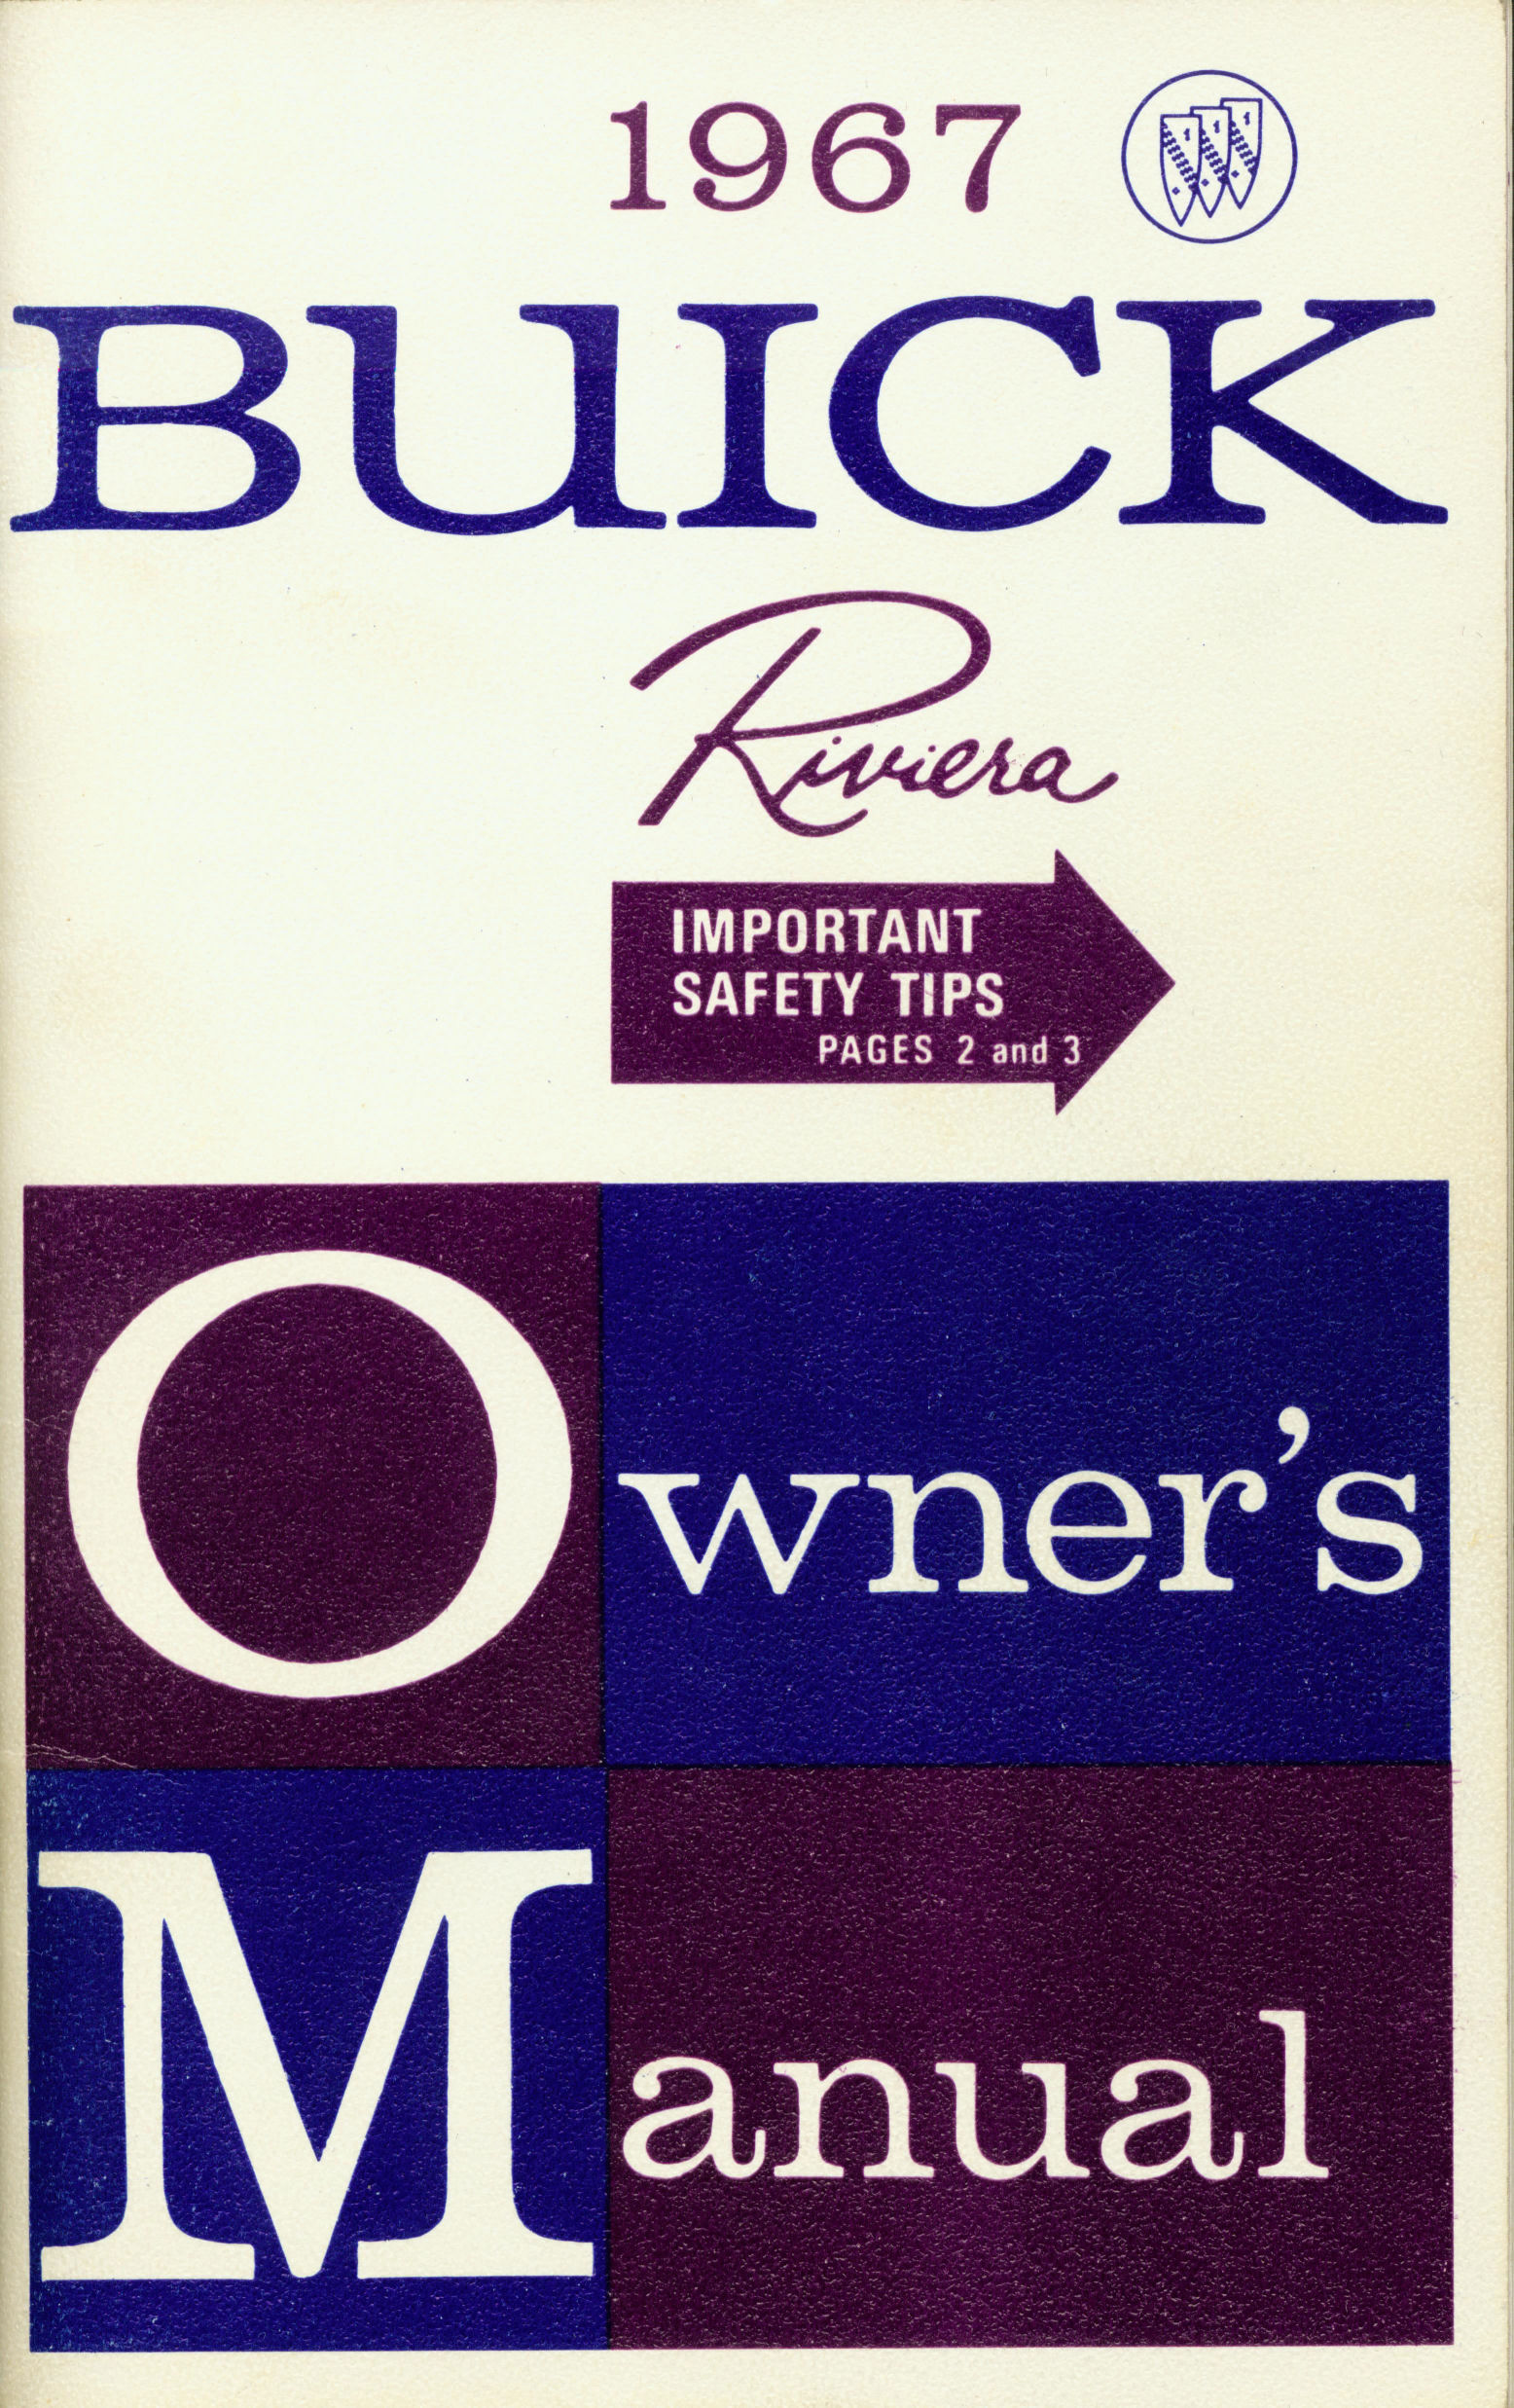 1967 Buick Riviera Manual Page 01